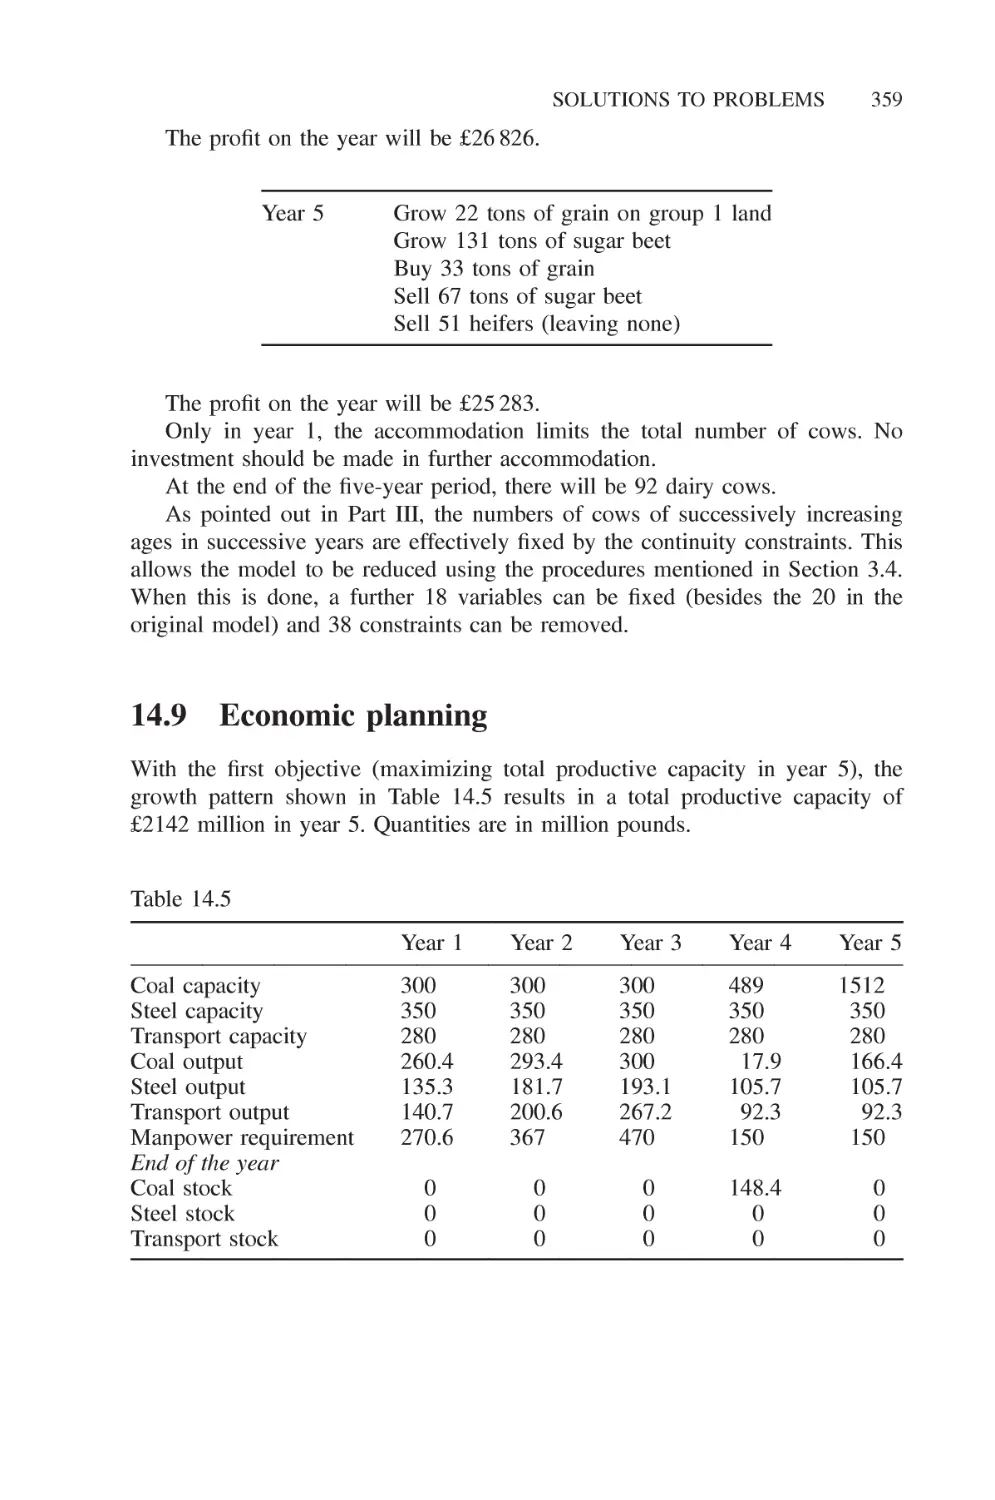 14.9 Economic planning